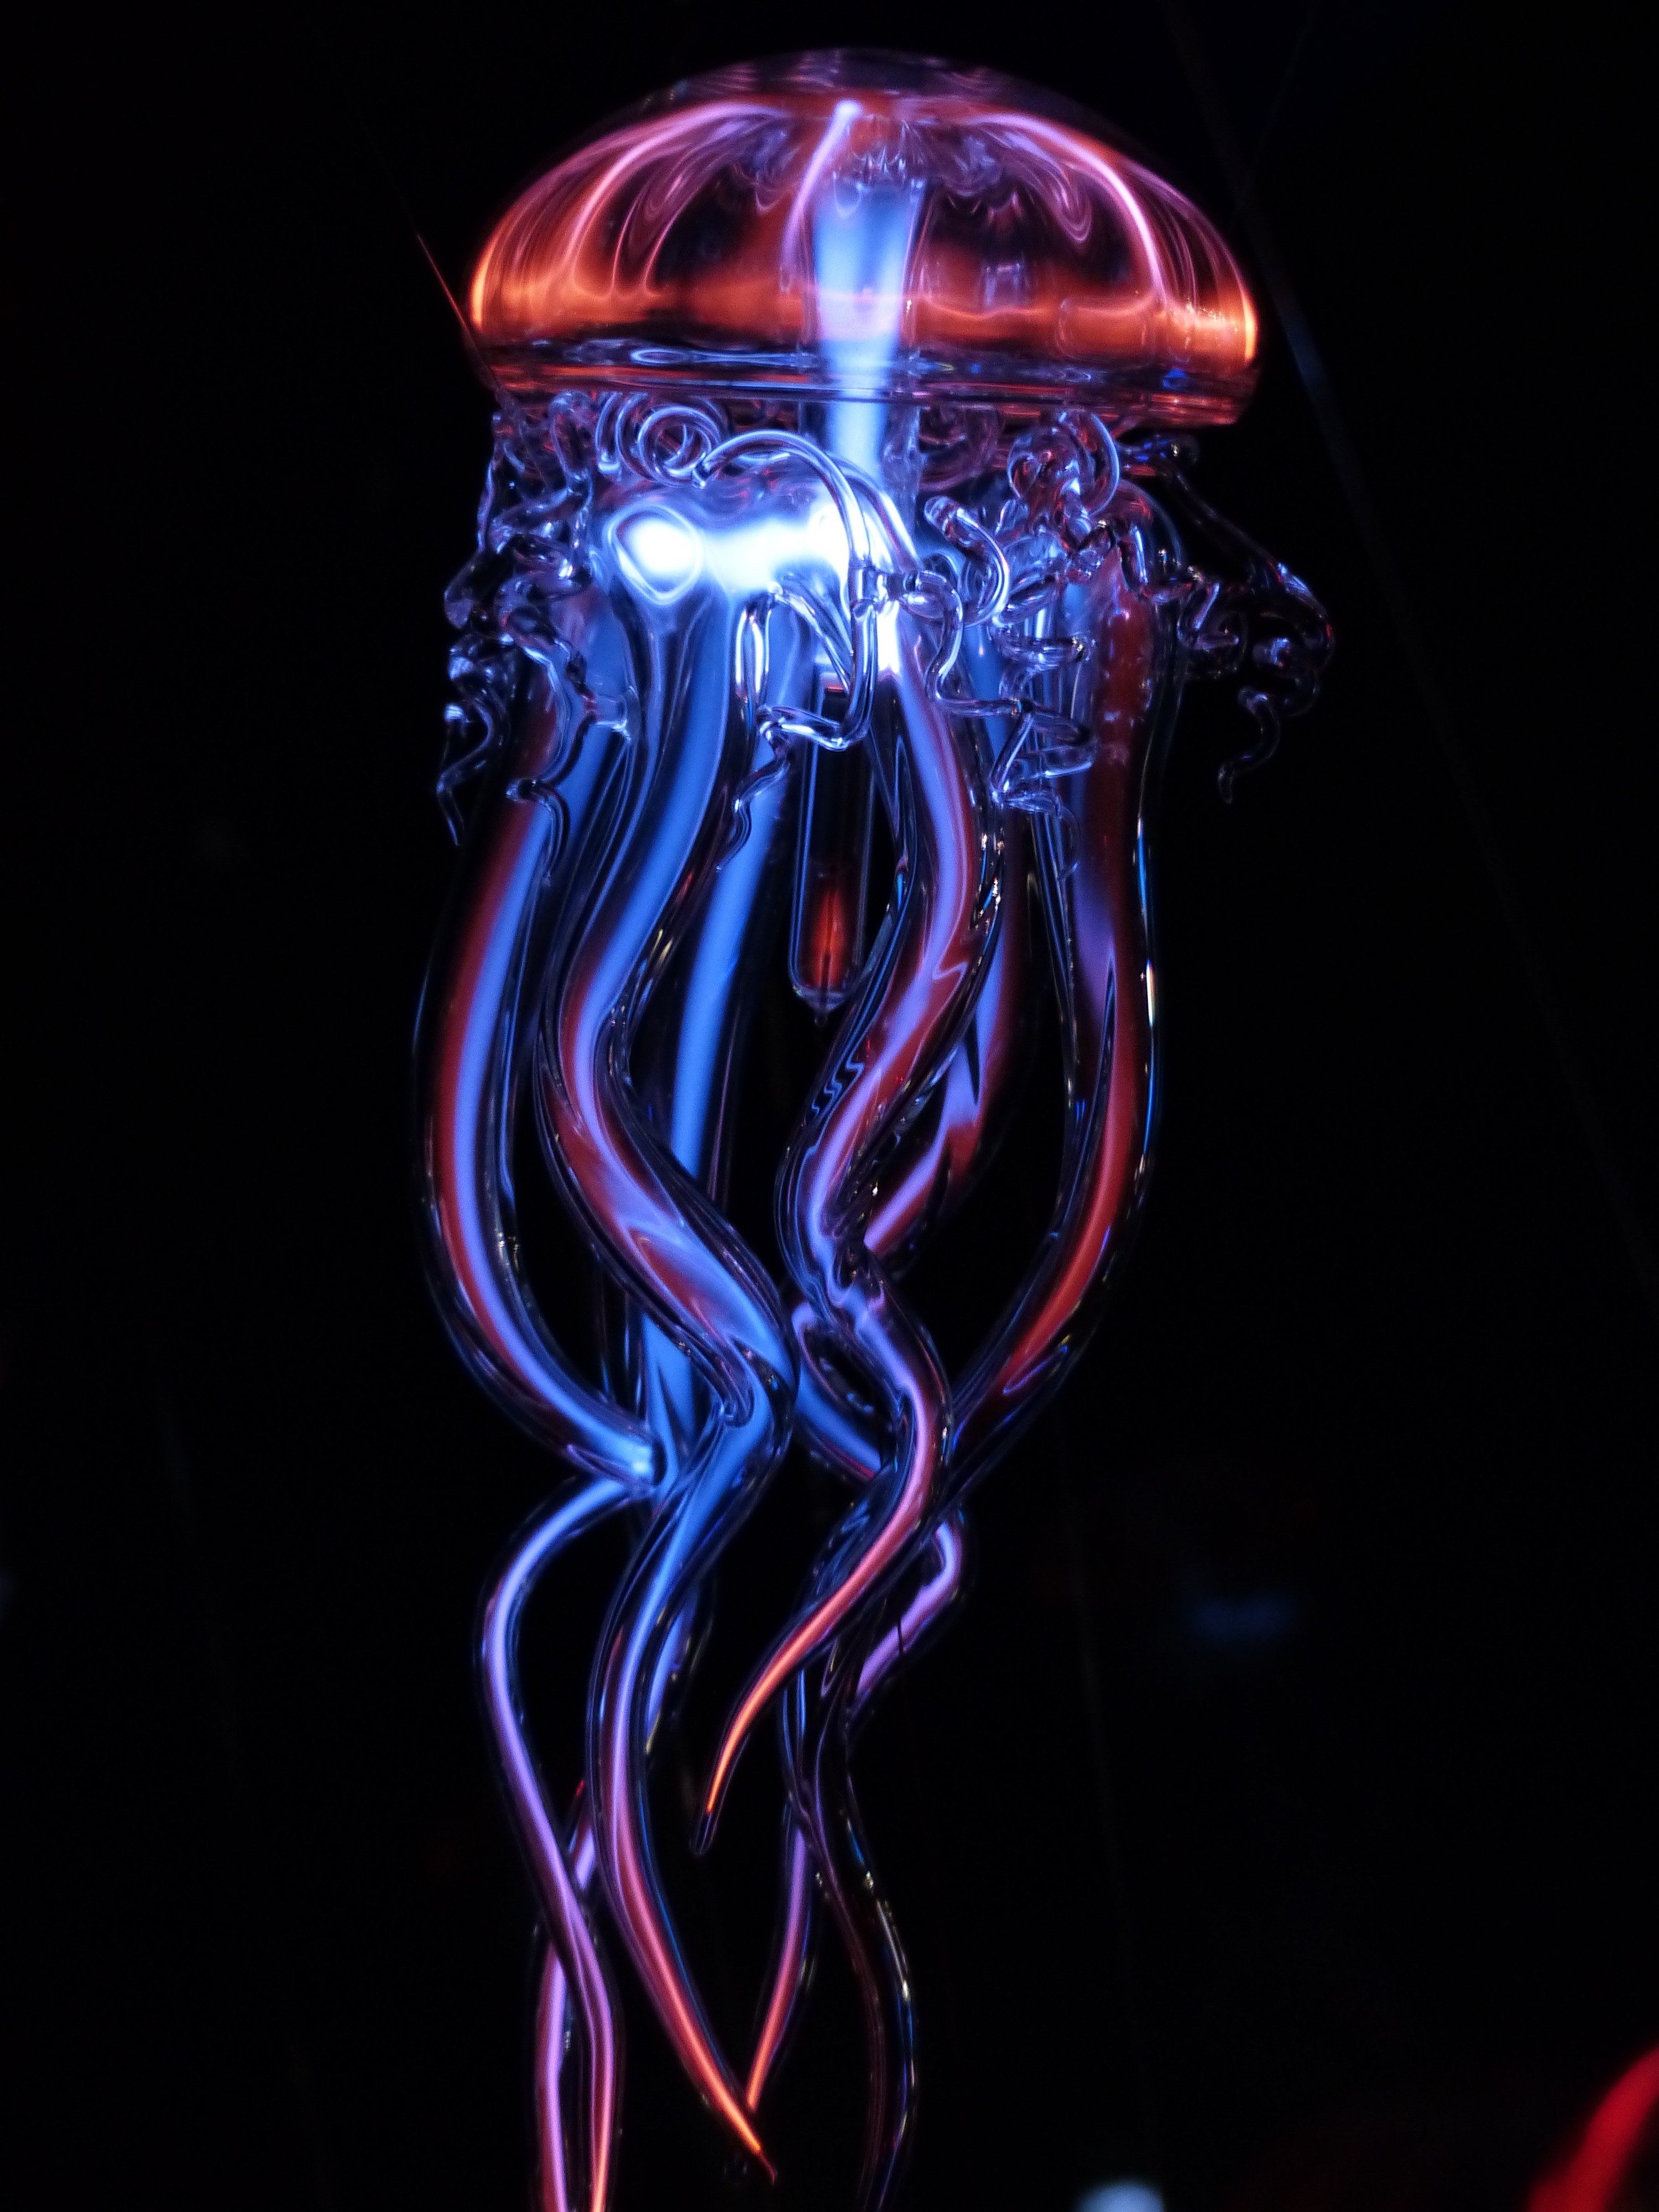 Wallpaper / jellyfish bioluminescence underwater and water HD 4k wallpaper free download